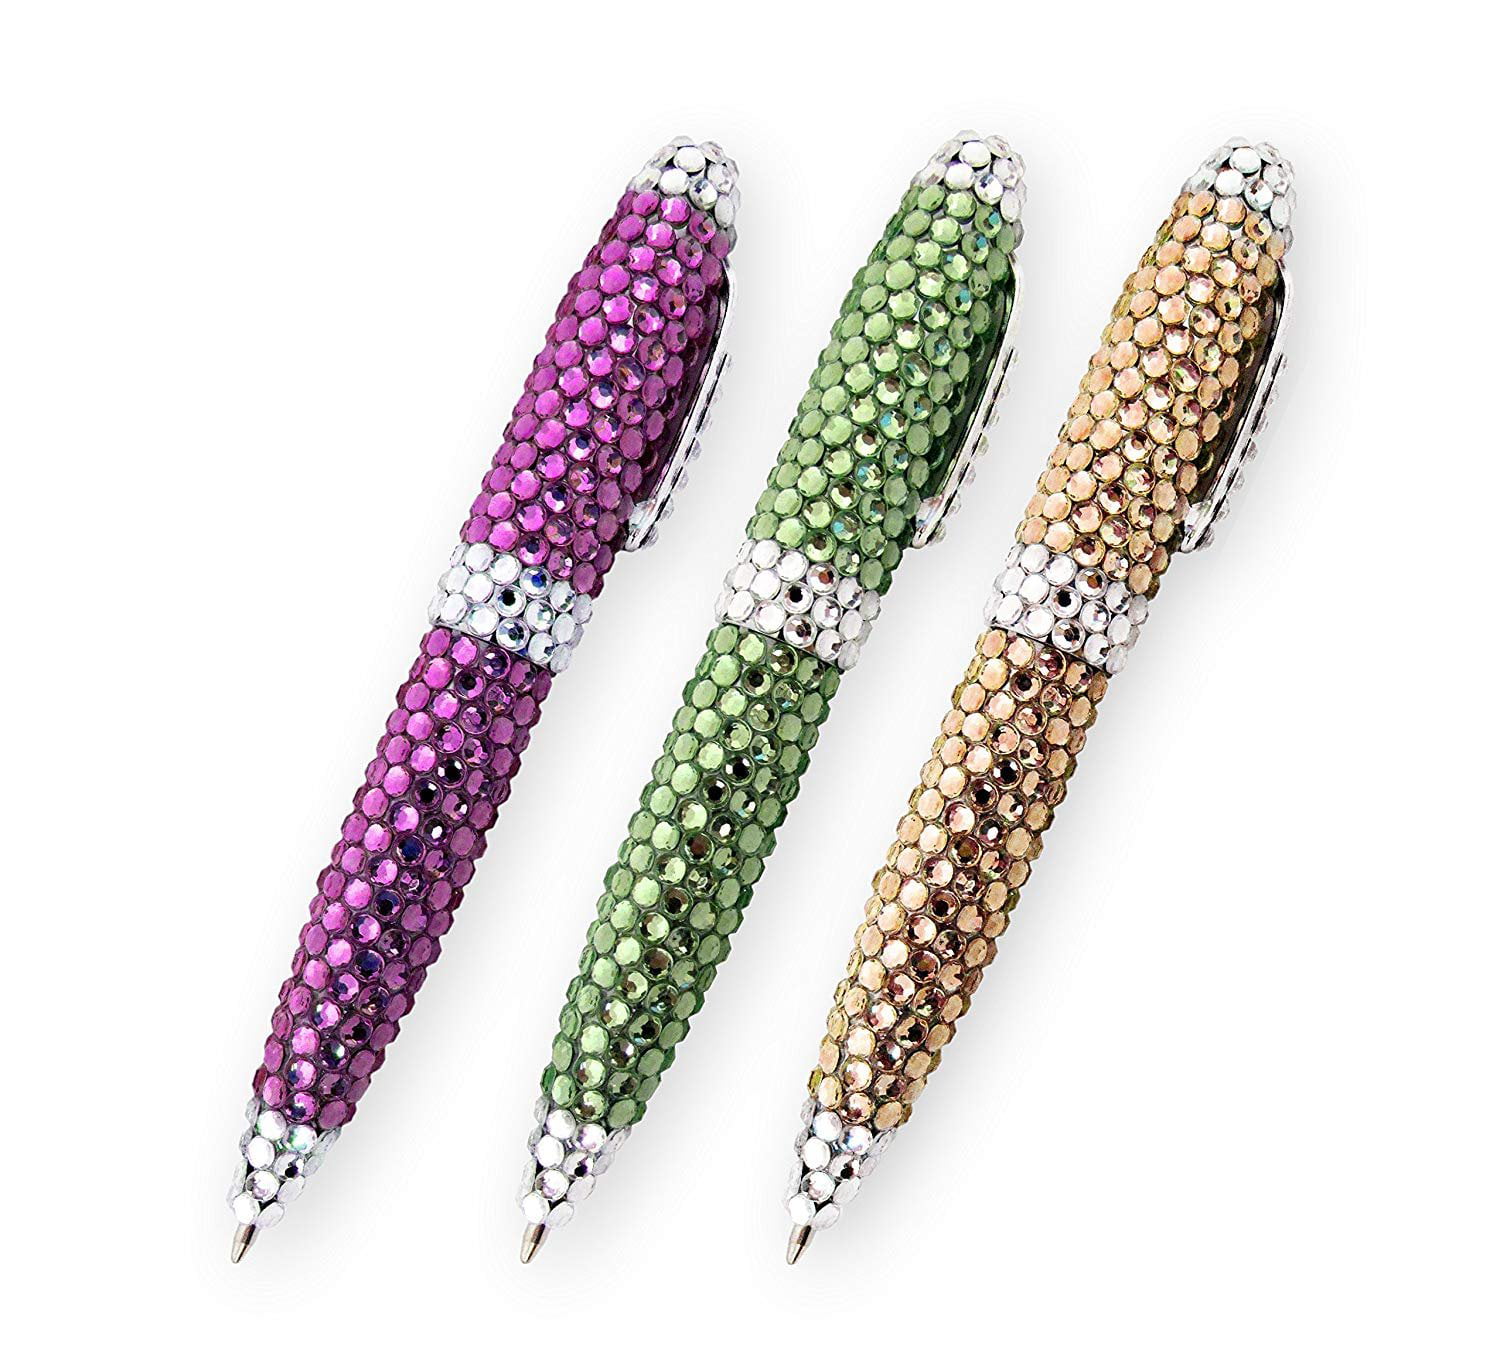 Inkology Glam Rocks Green Rhinestones Ball Point Pen bling sparkle sparkly 